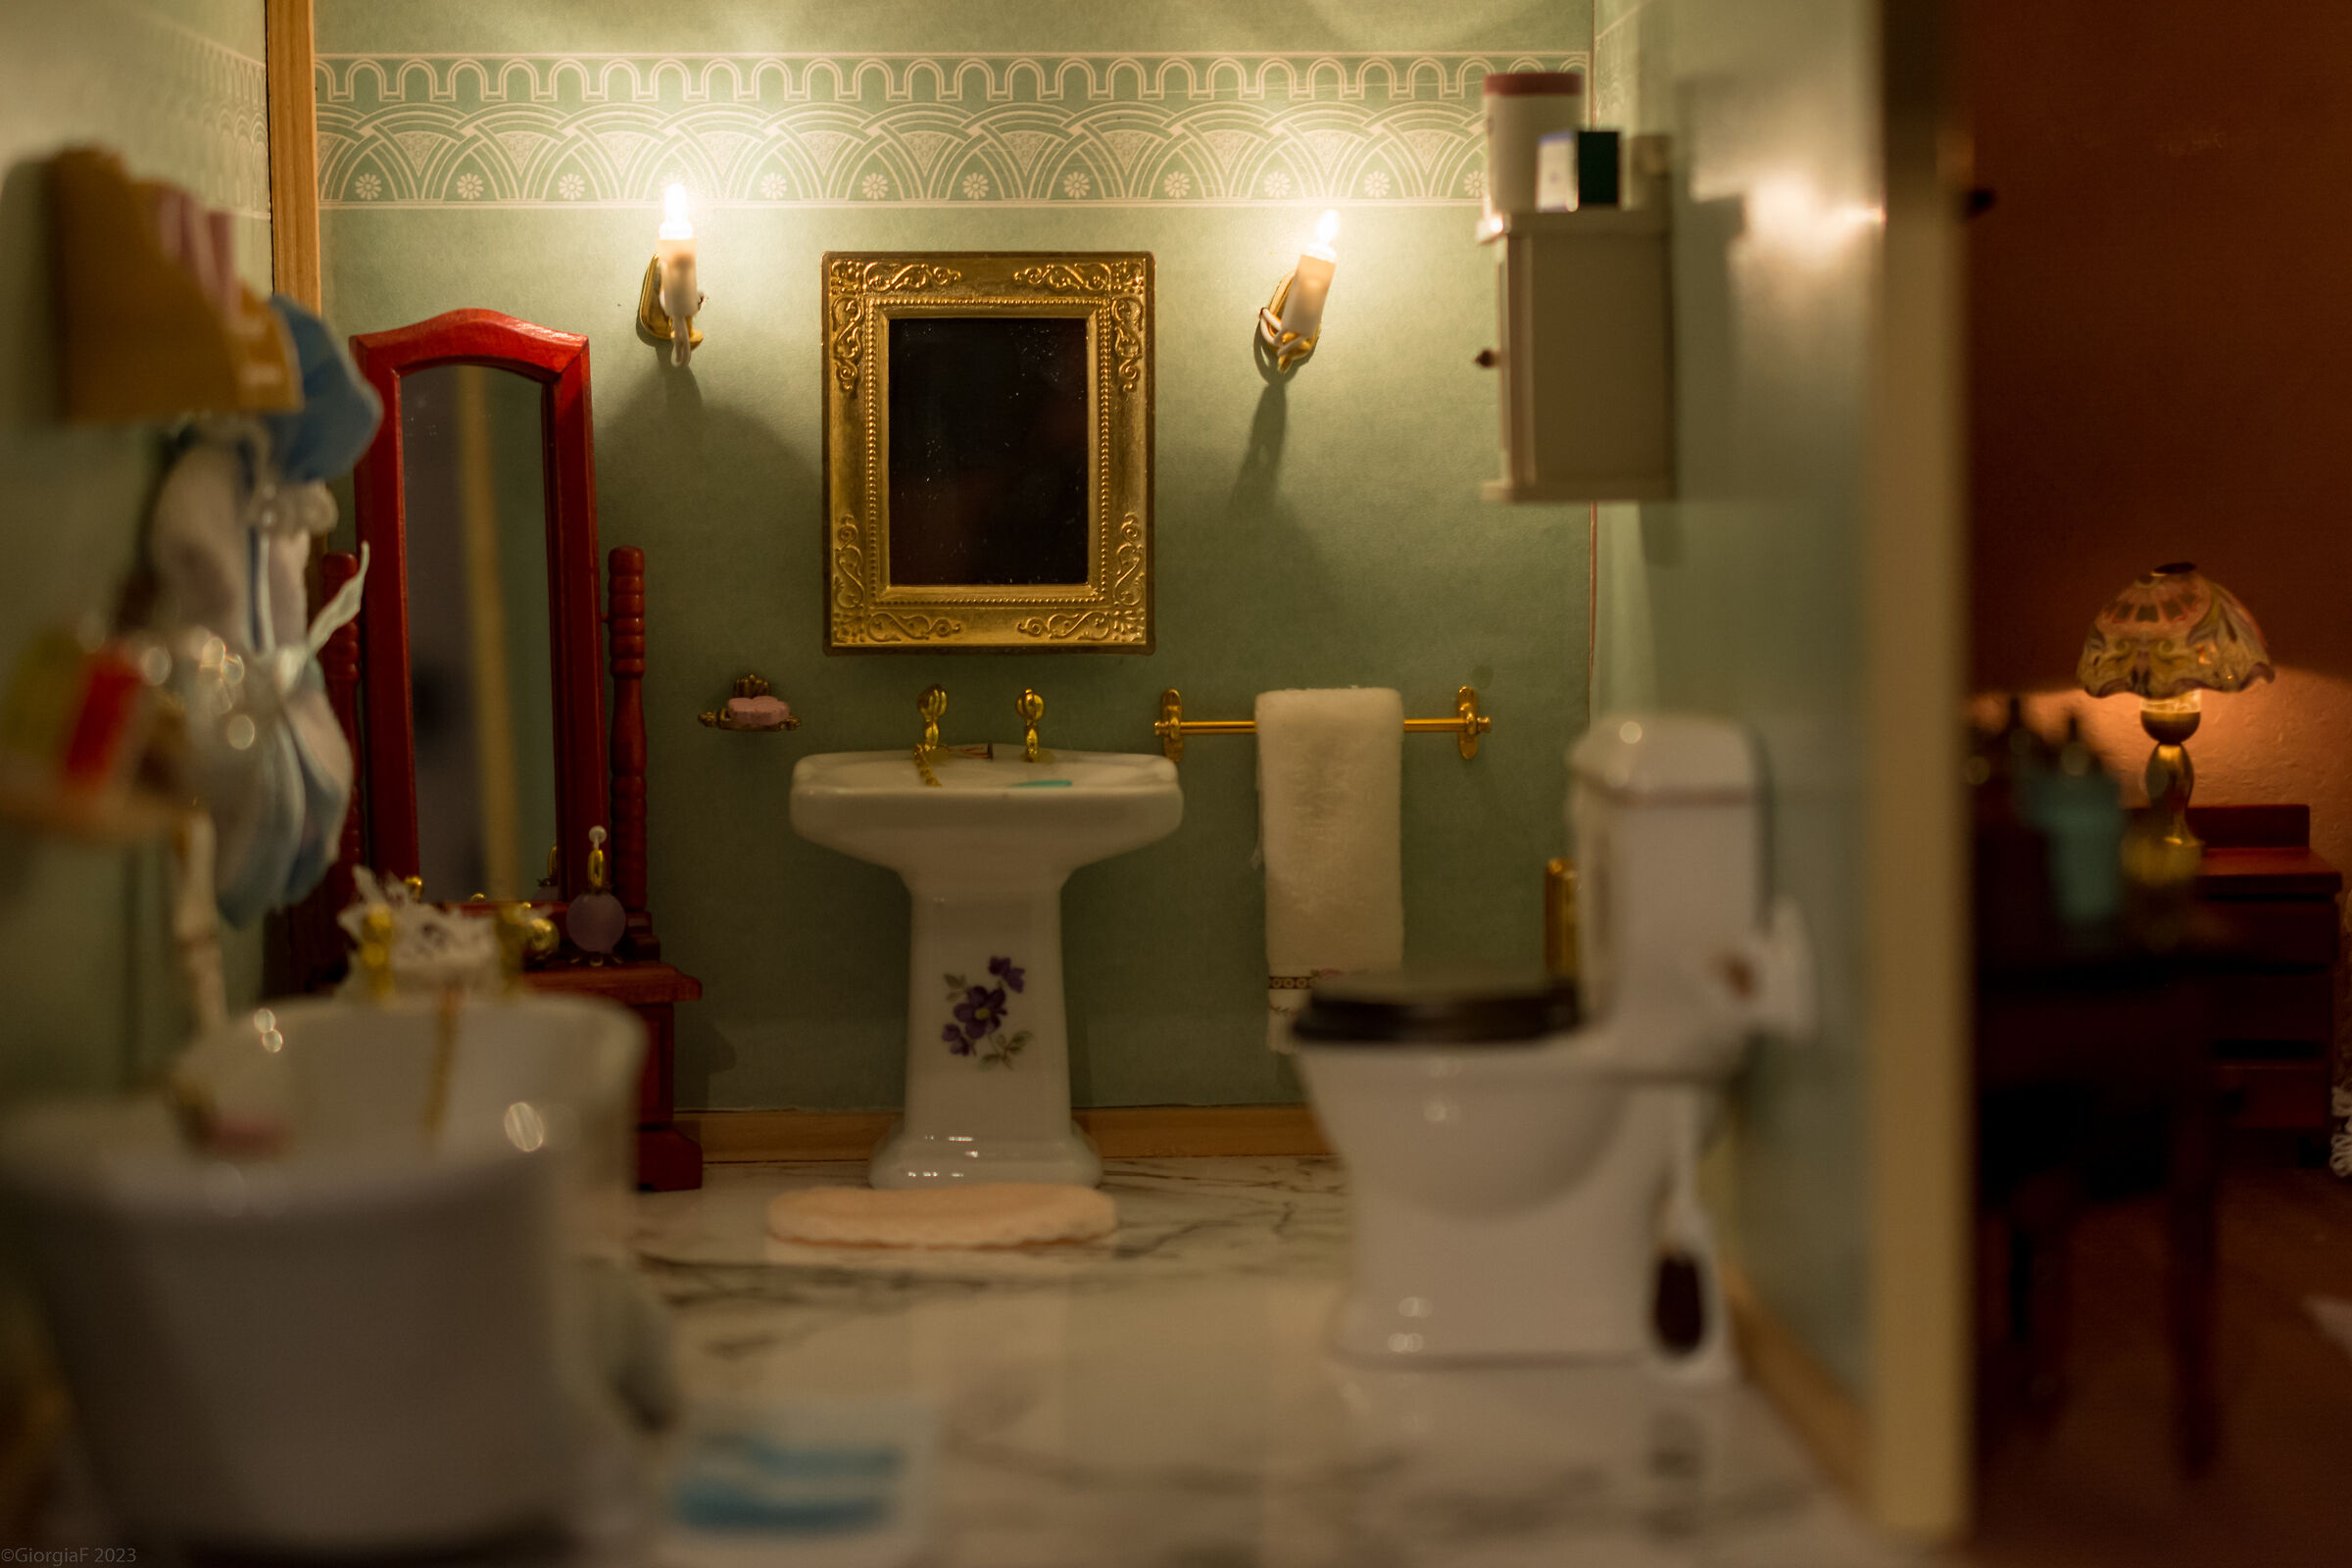 The miniature bathroom...